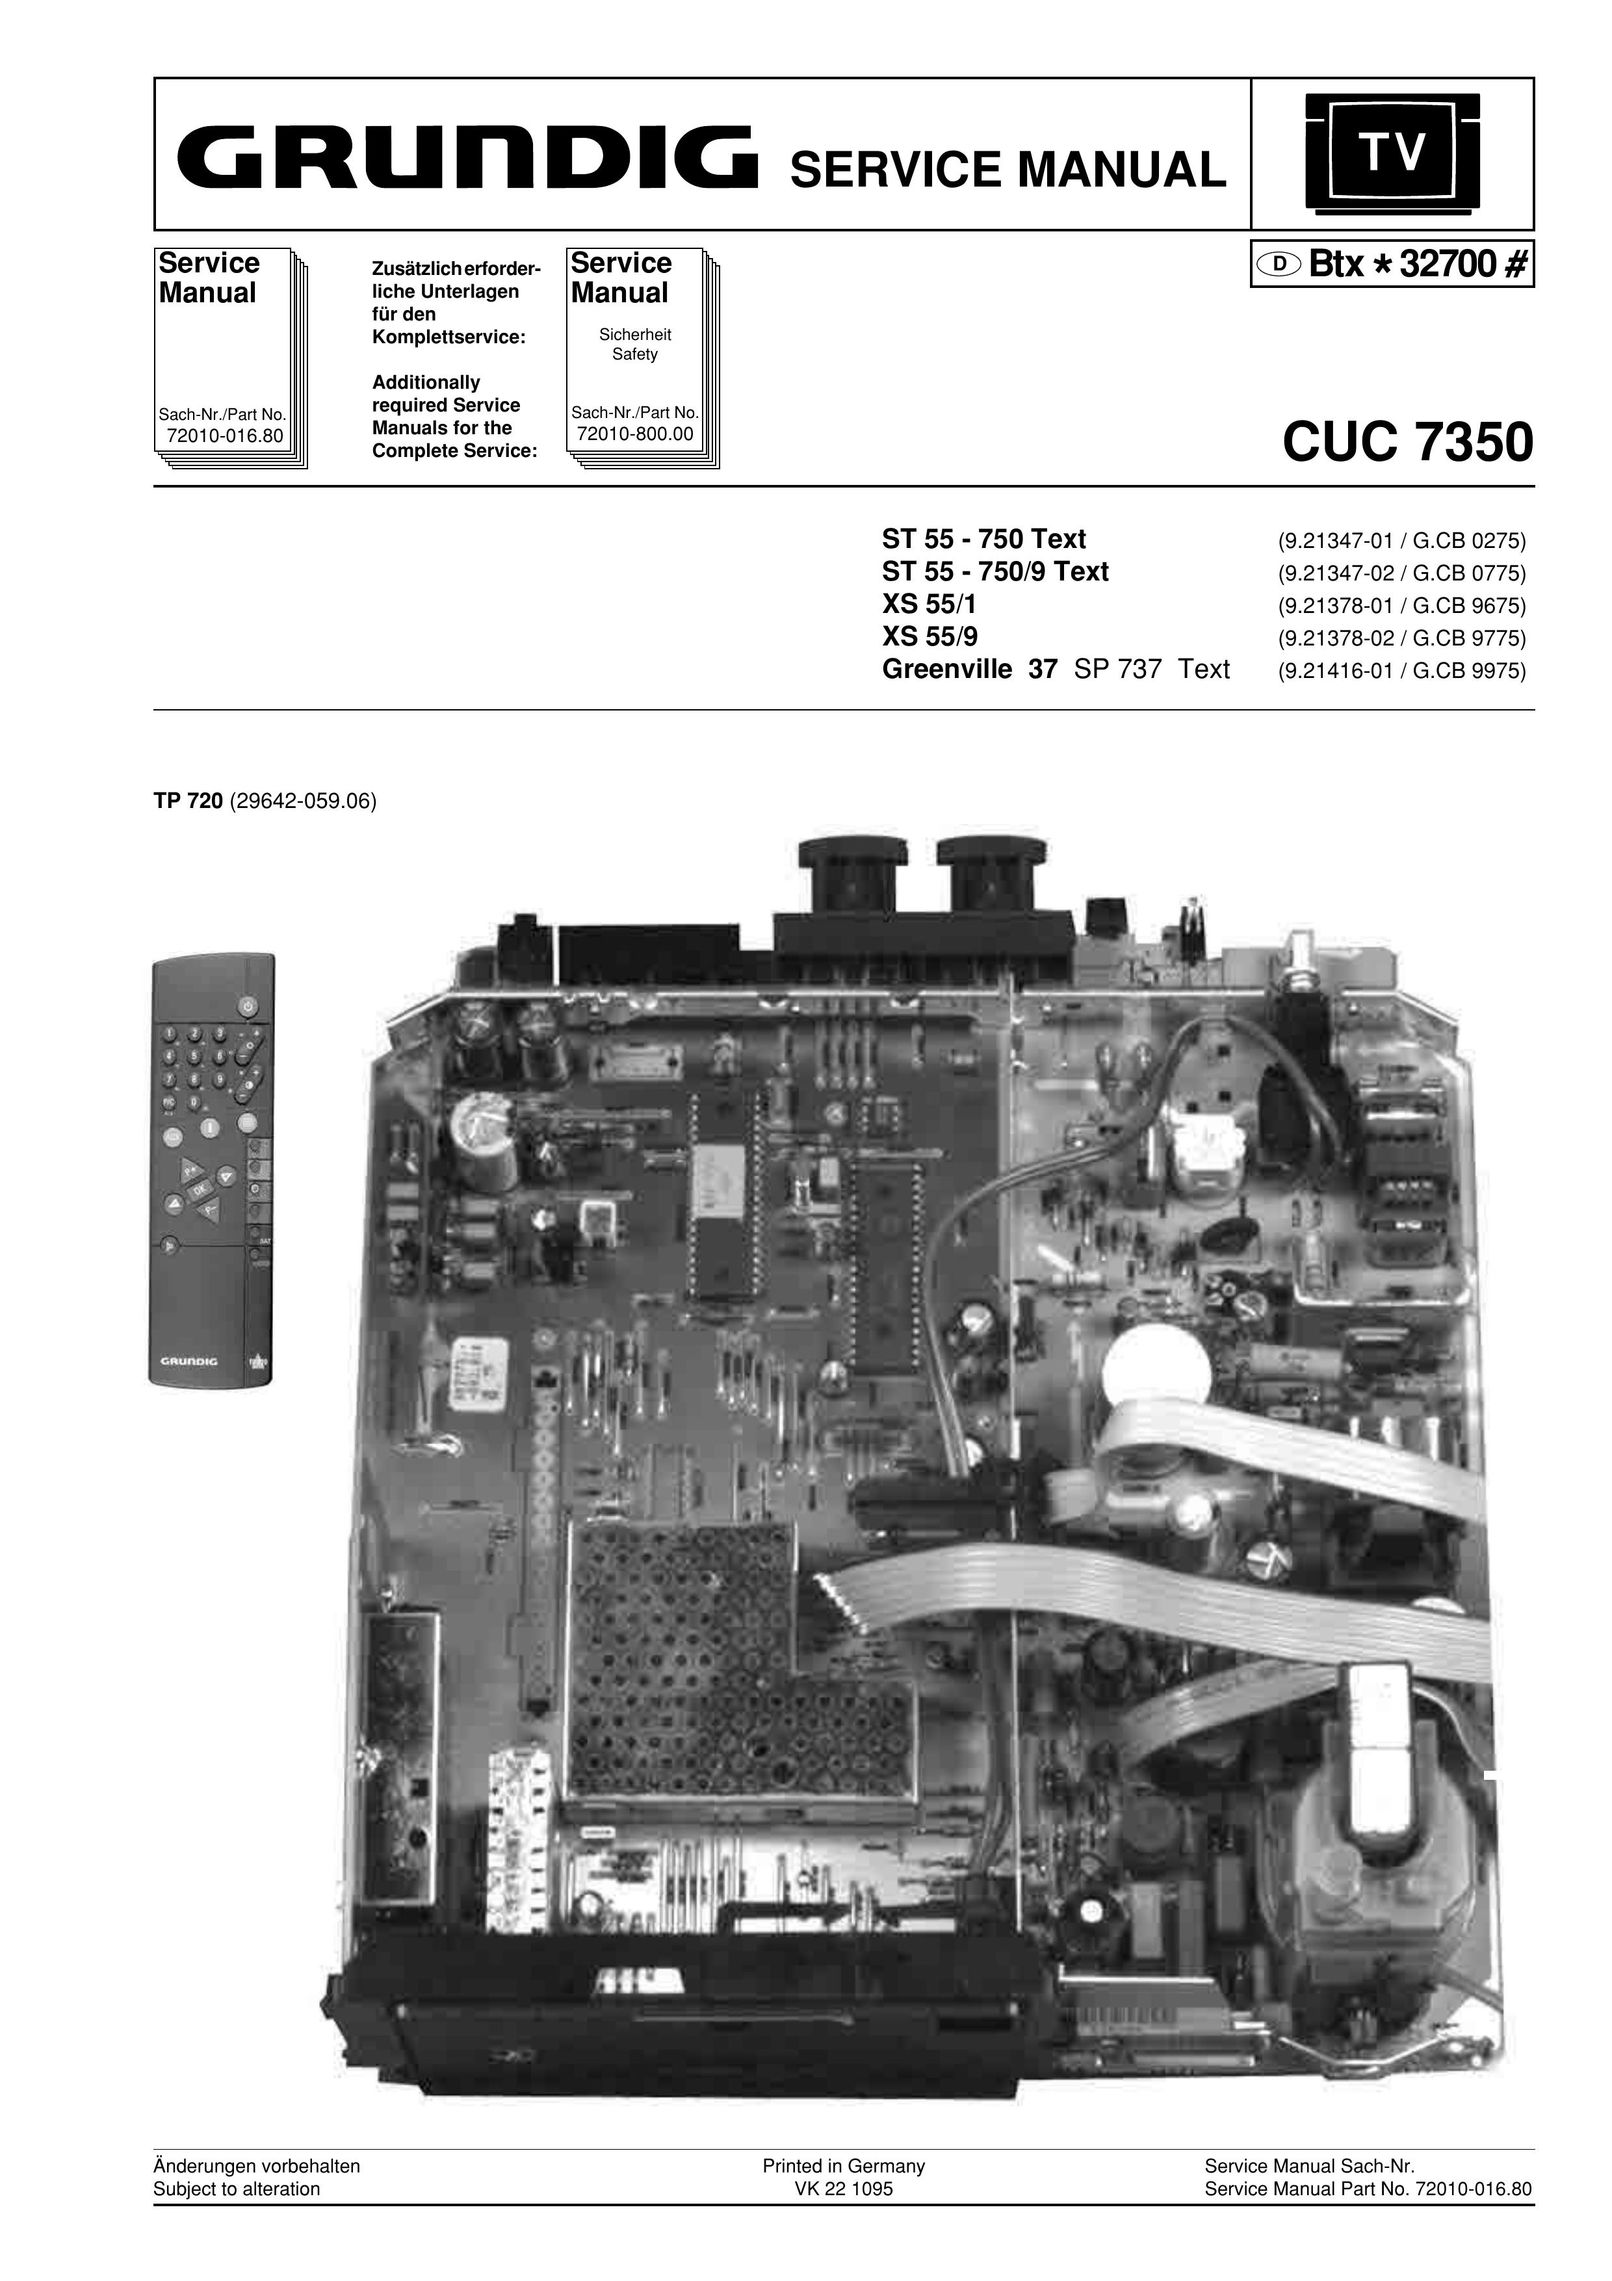 Grundig ST 55 - 750/9 Network Card User Manual